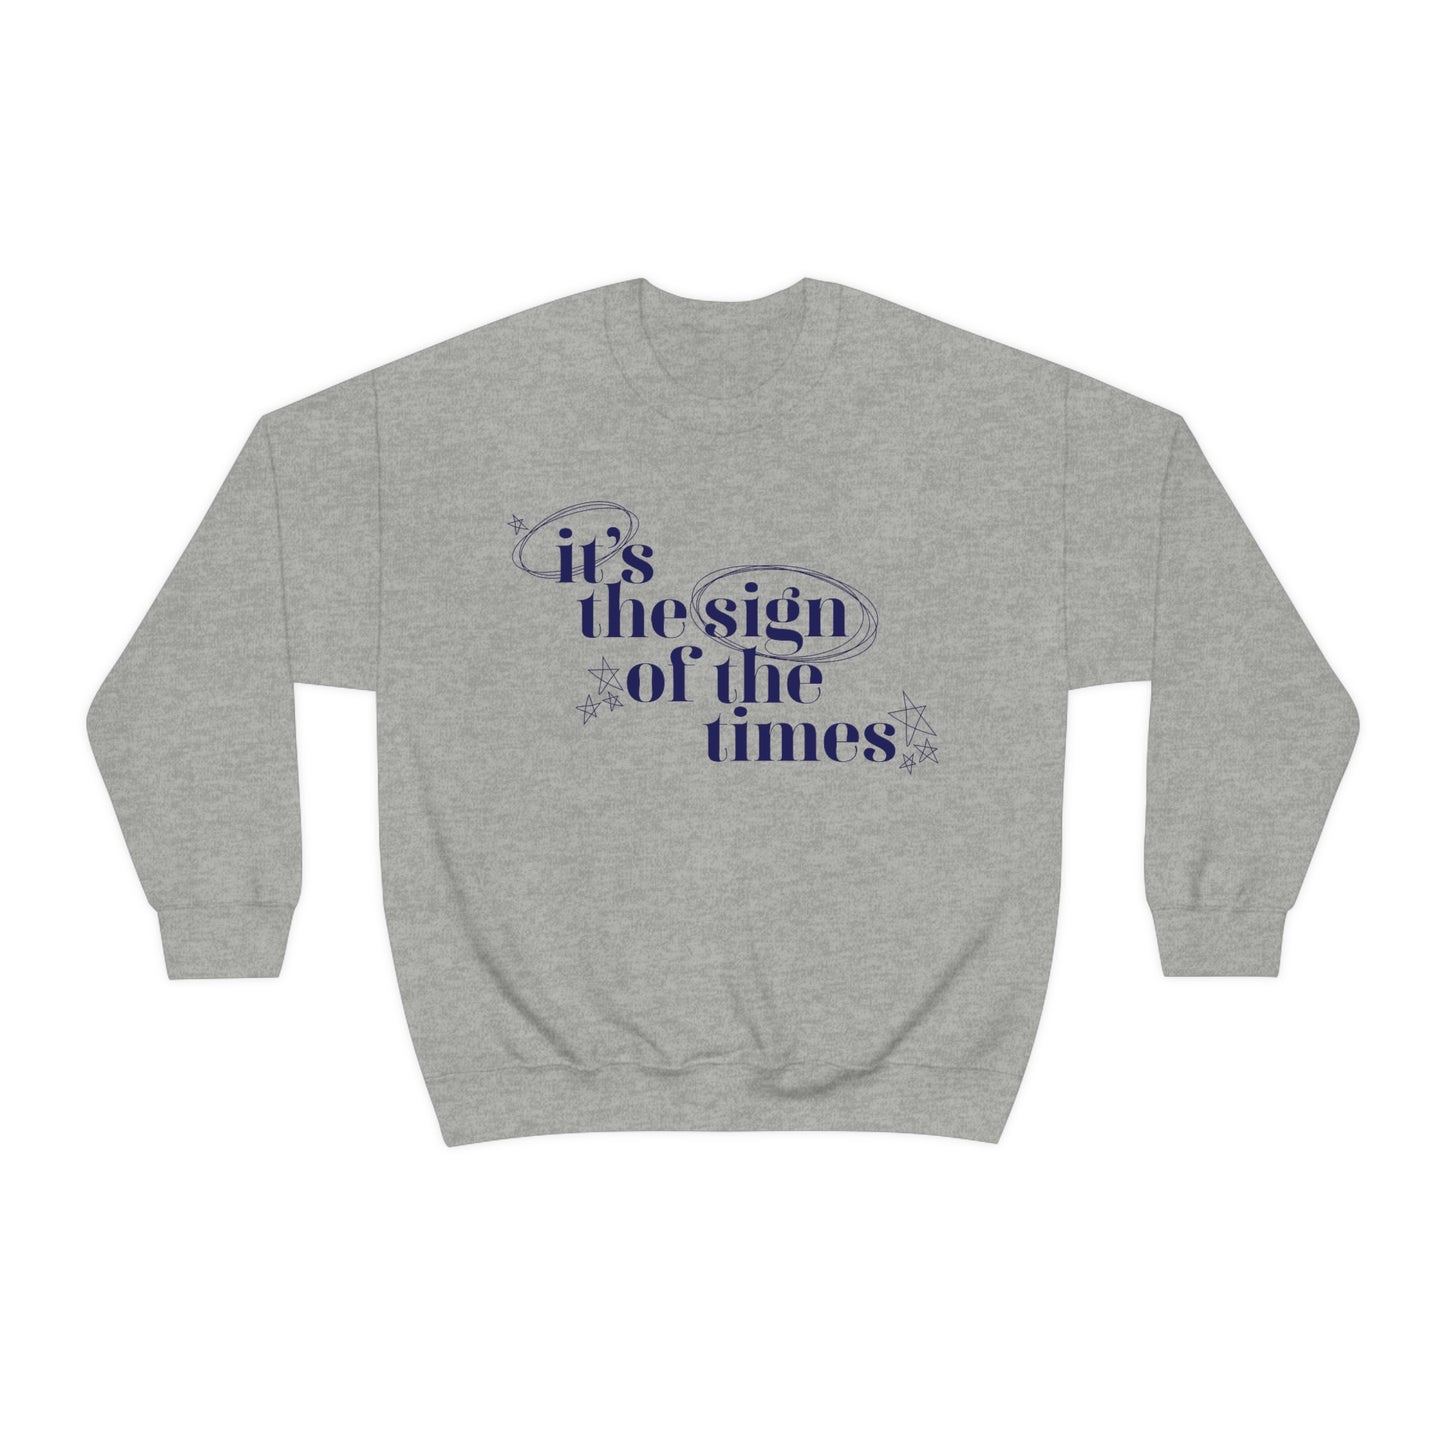 Sign of the Times Crewneck Sweatshirt